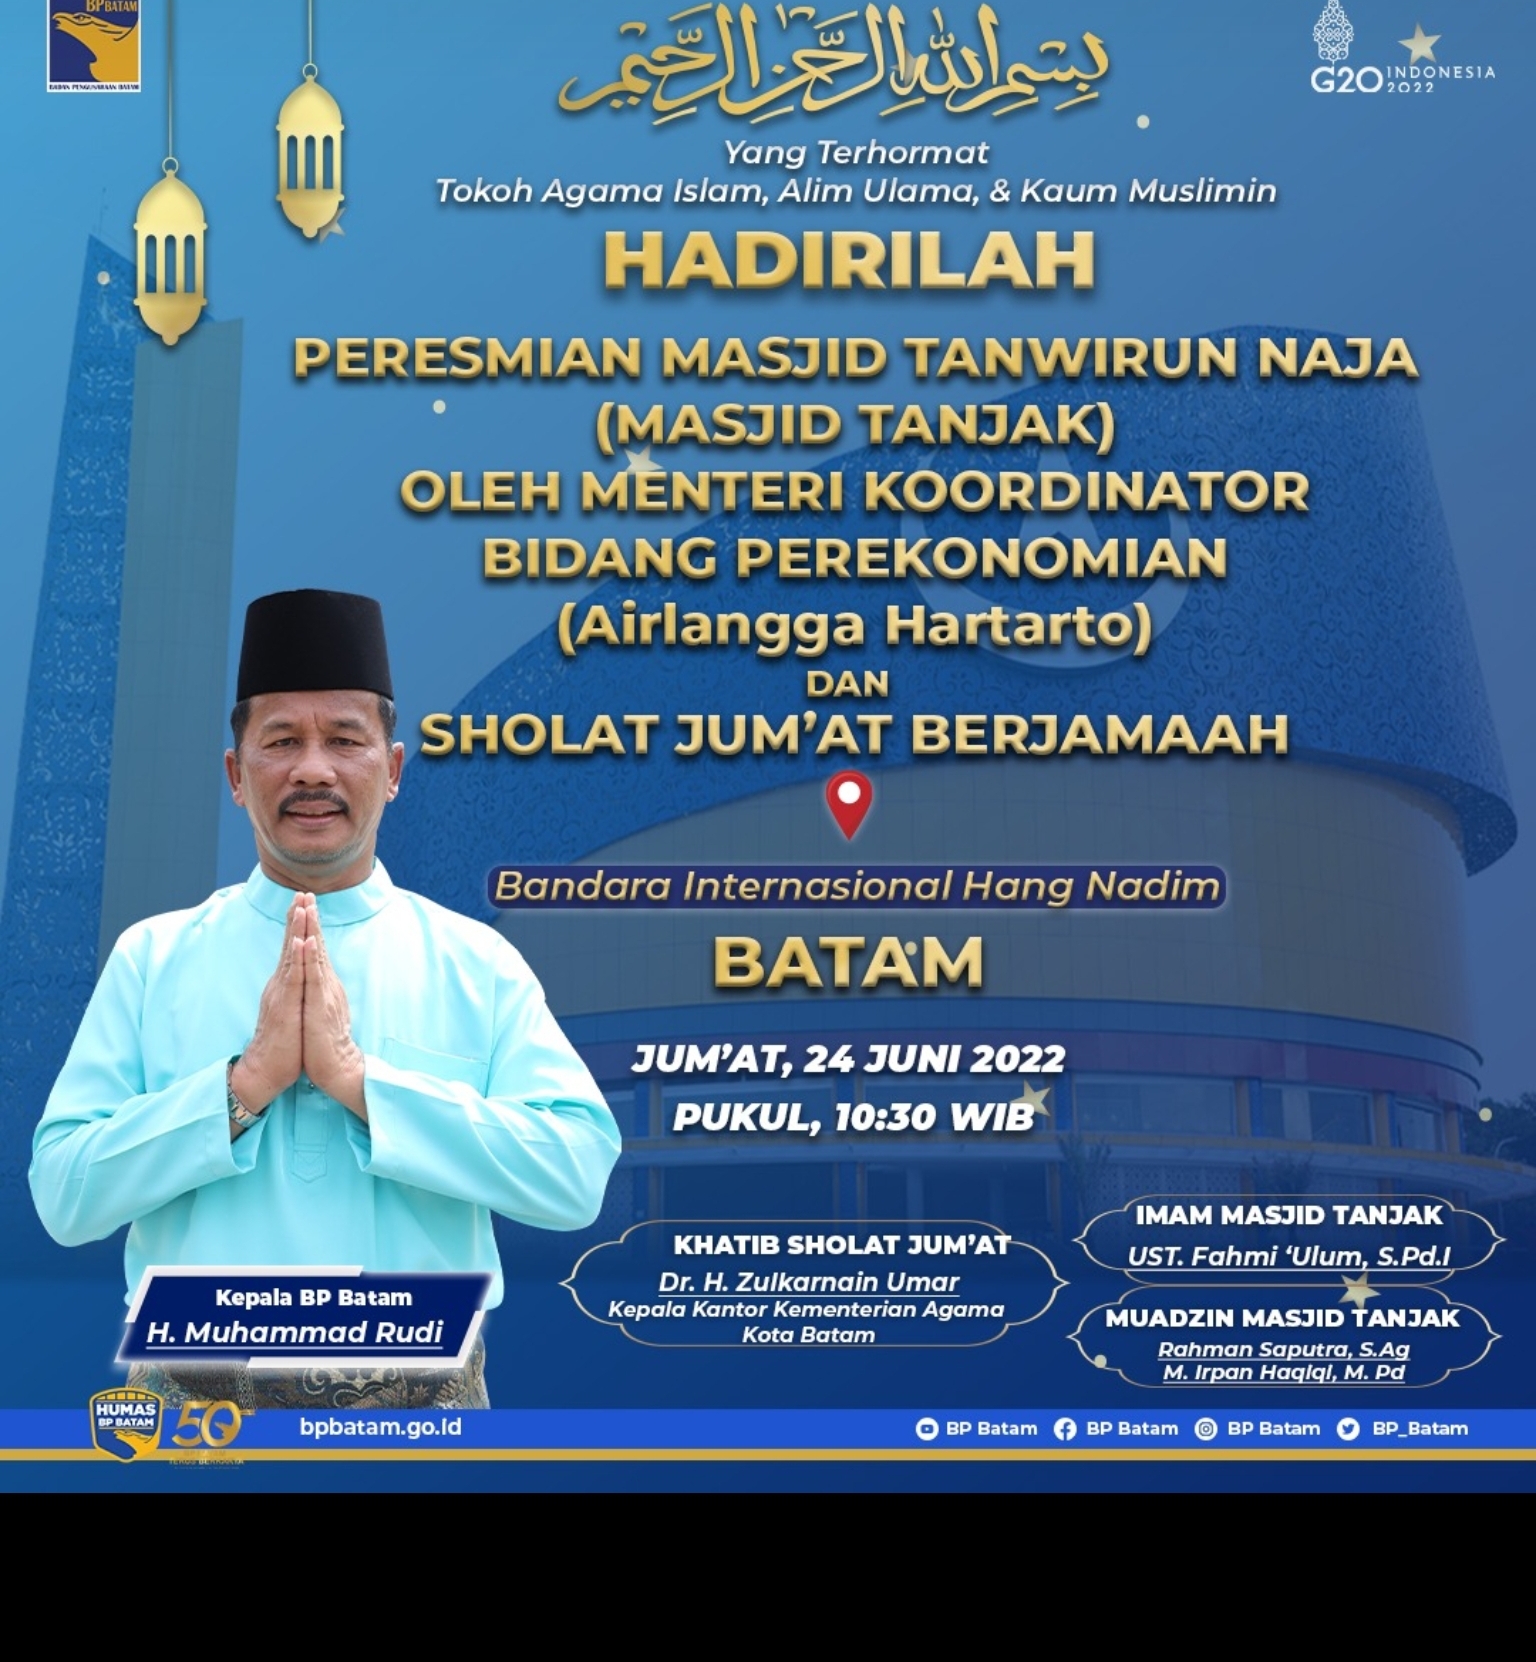 Besok, Airlangga, HM Rudi, Ansar dan Marlin Hadiri Peresmian Masjid Tanjak